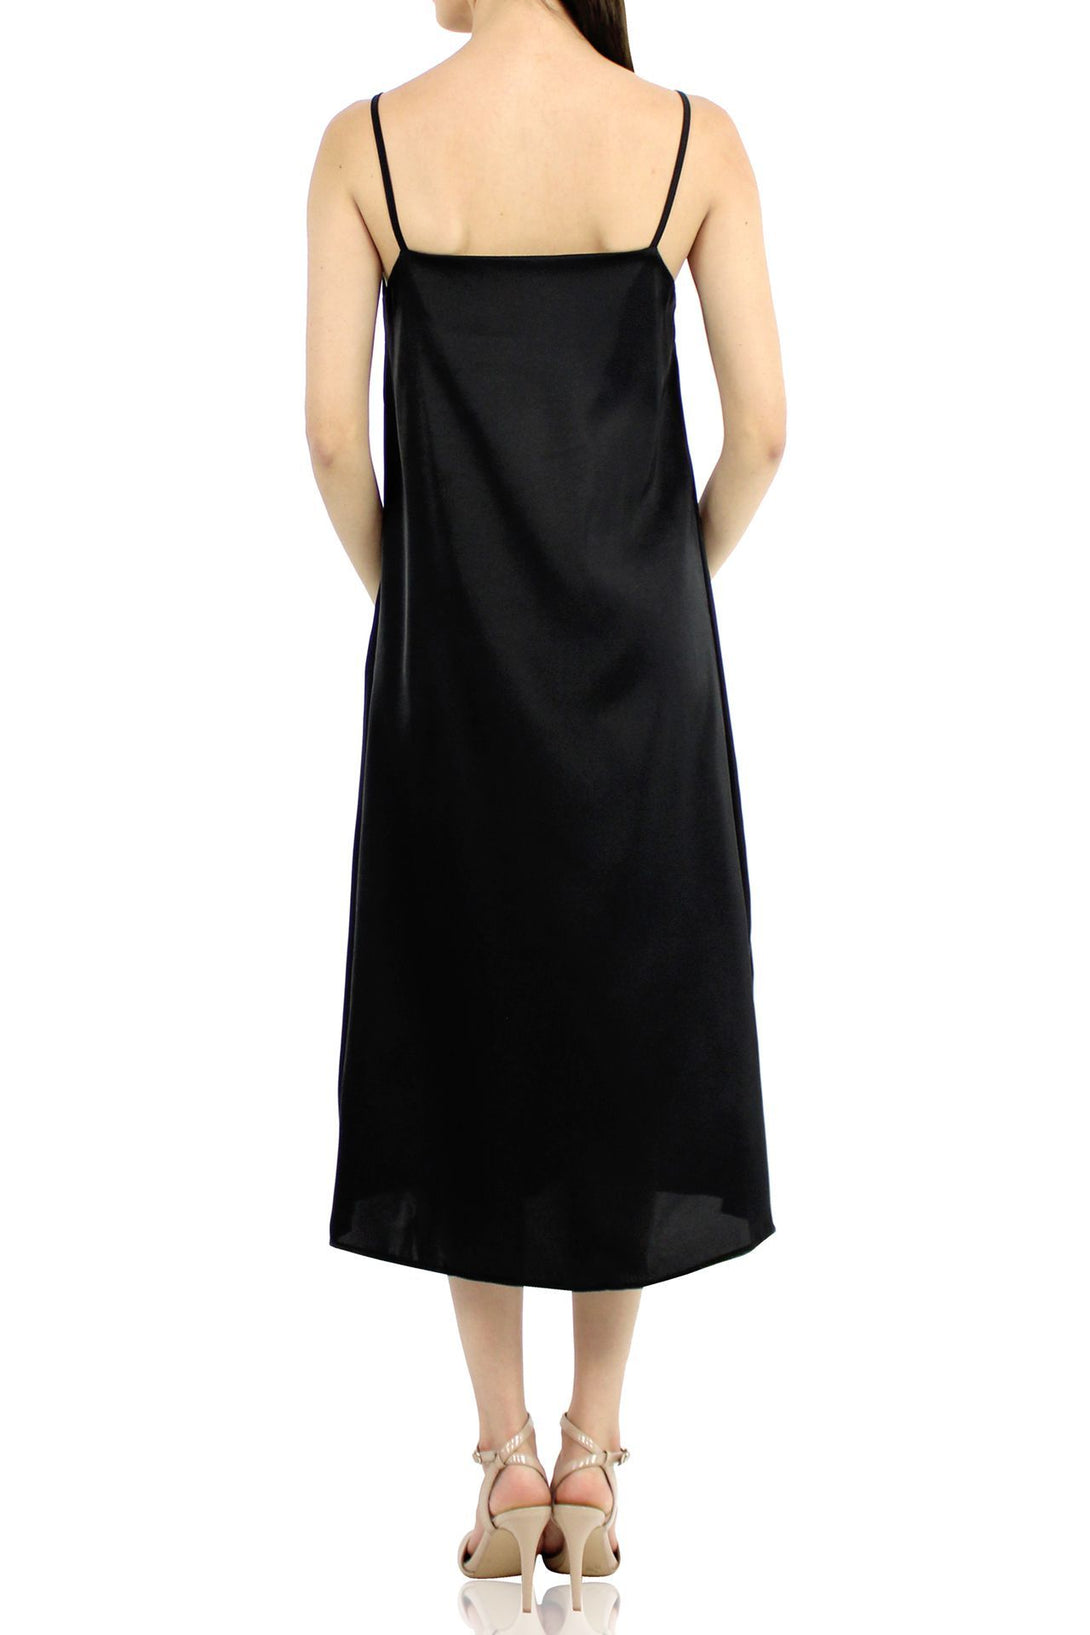 Women-Designer-Black-Dress-By-Kyle-Richard